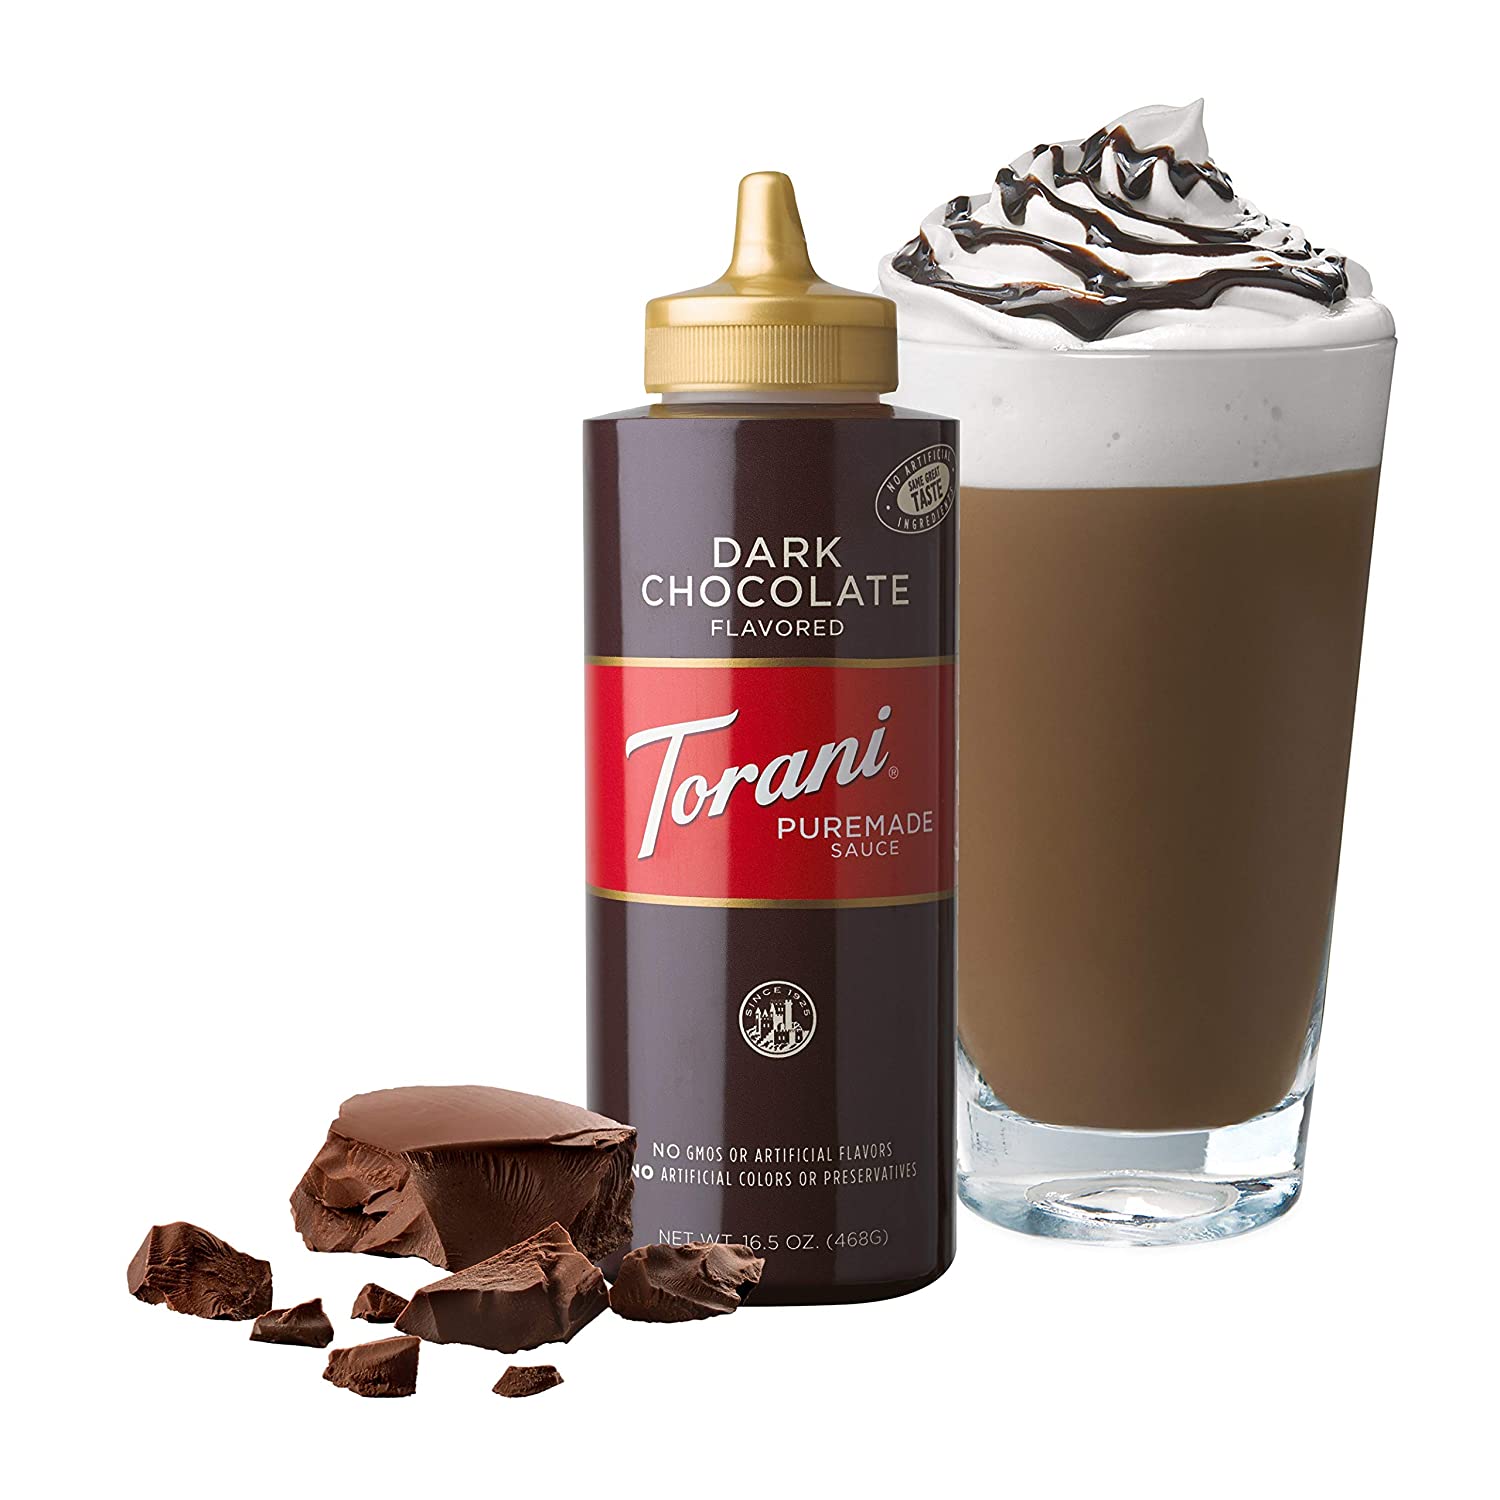 Torani Puremade Dark Chocolate Sauce: 16oz Bottle